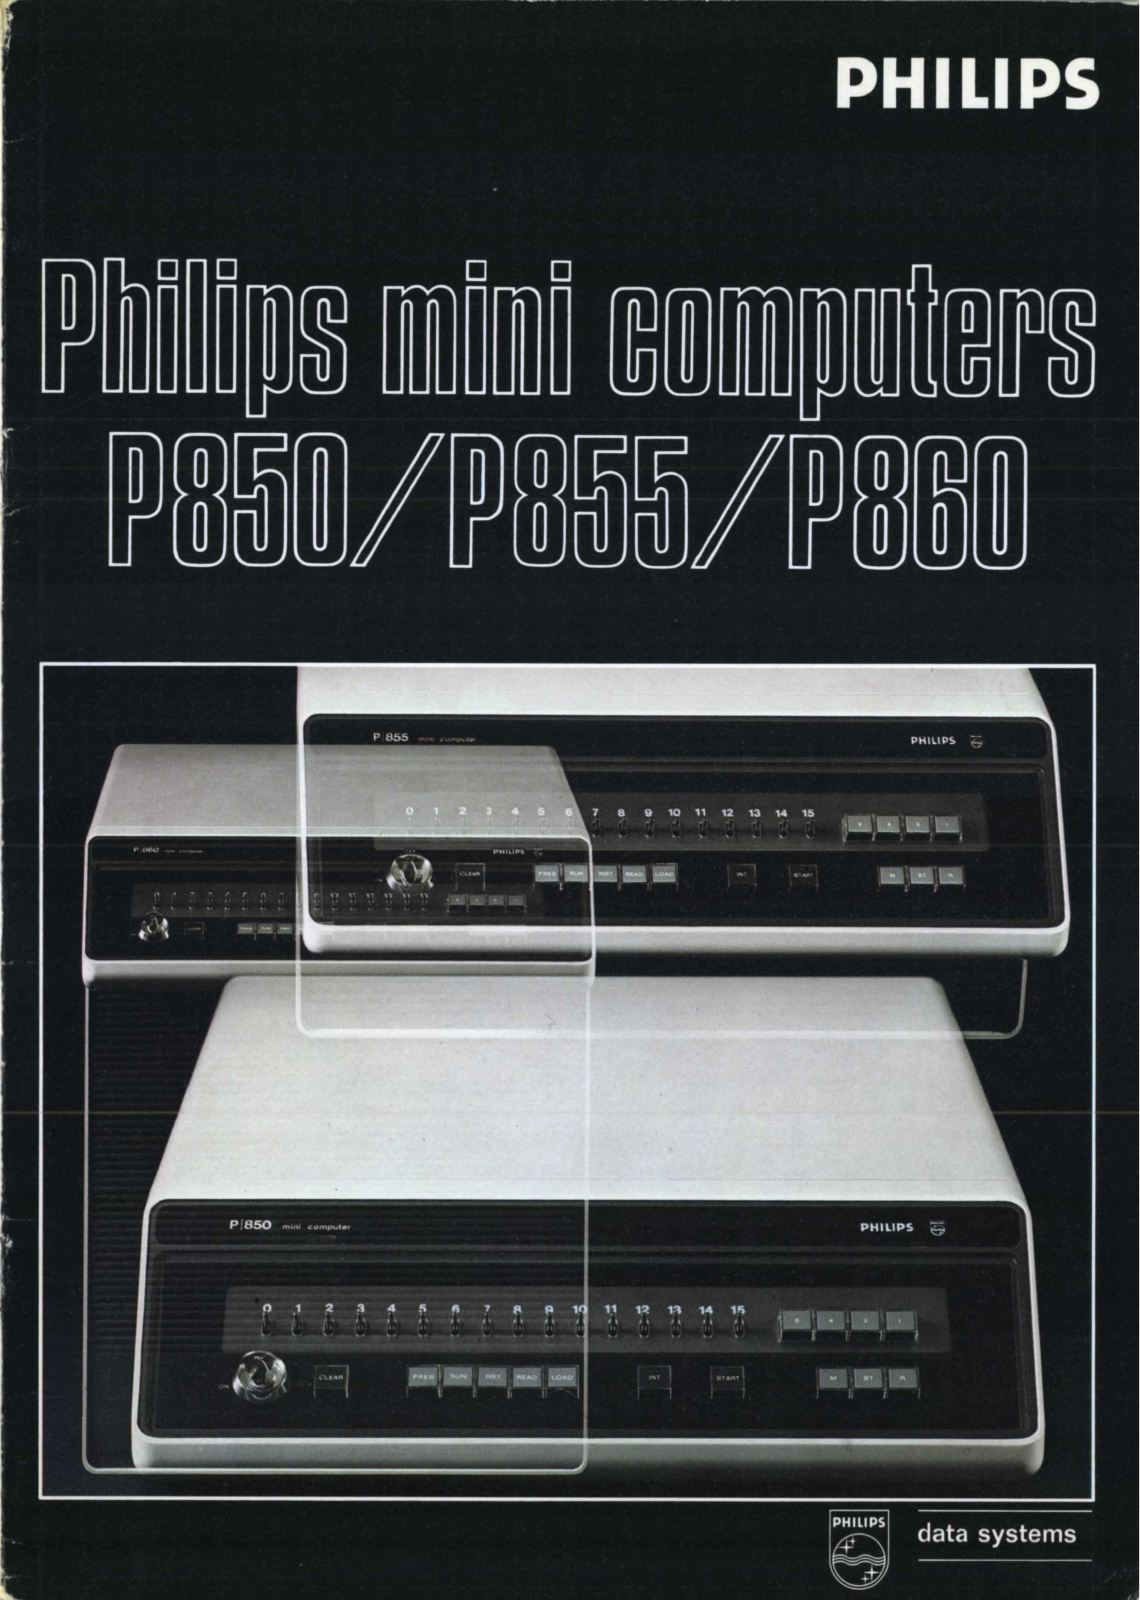 Philips P850, P855, P860 Brochure